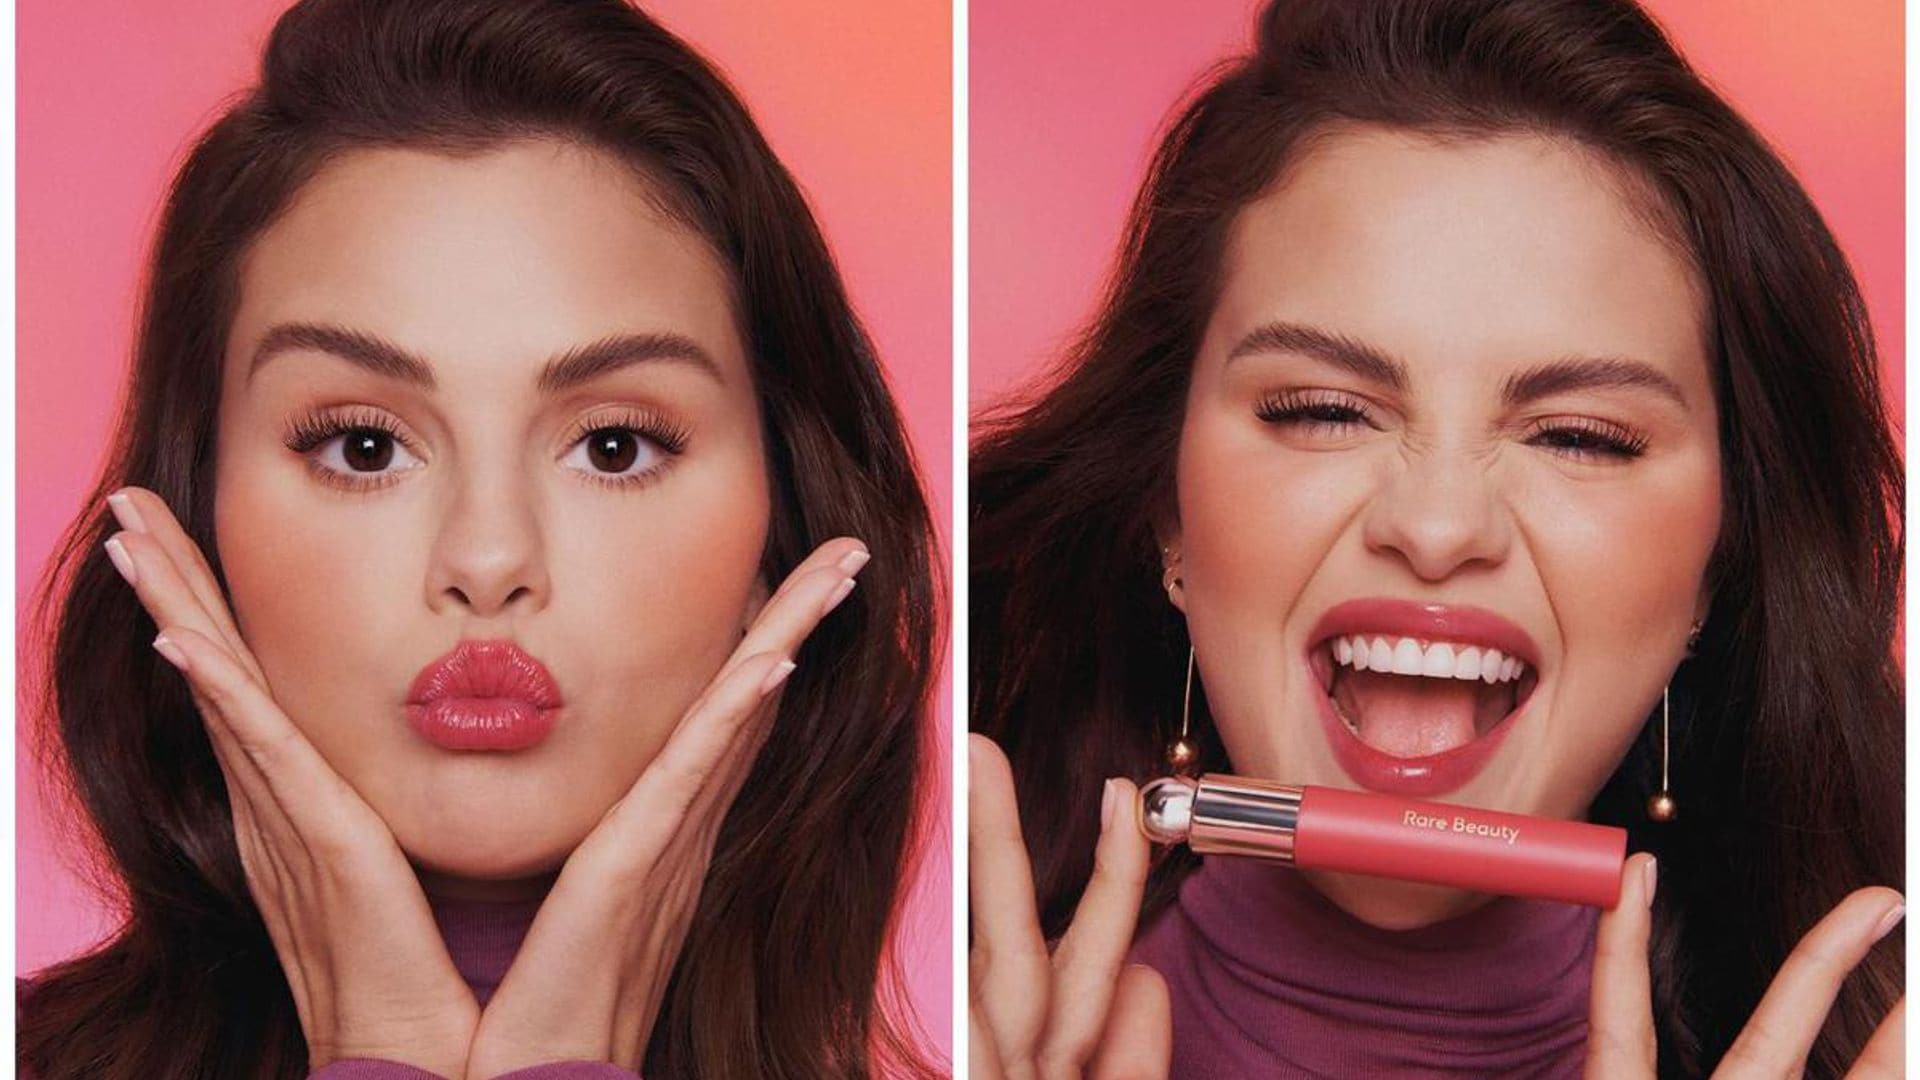 Selena Gomez’s Rare Beauty drops new “innovative lip jelly” that nourishes and hydrates